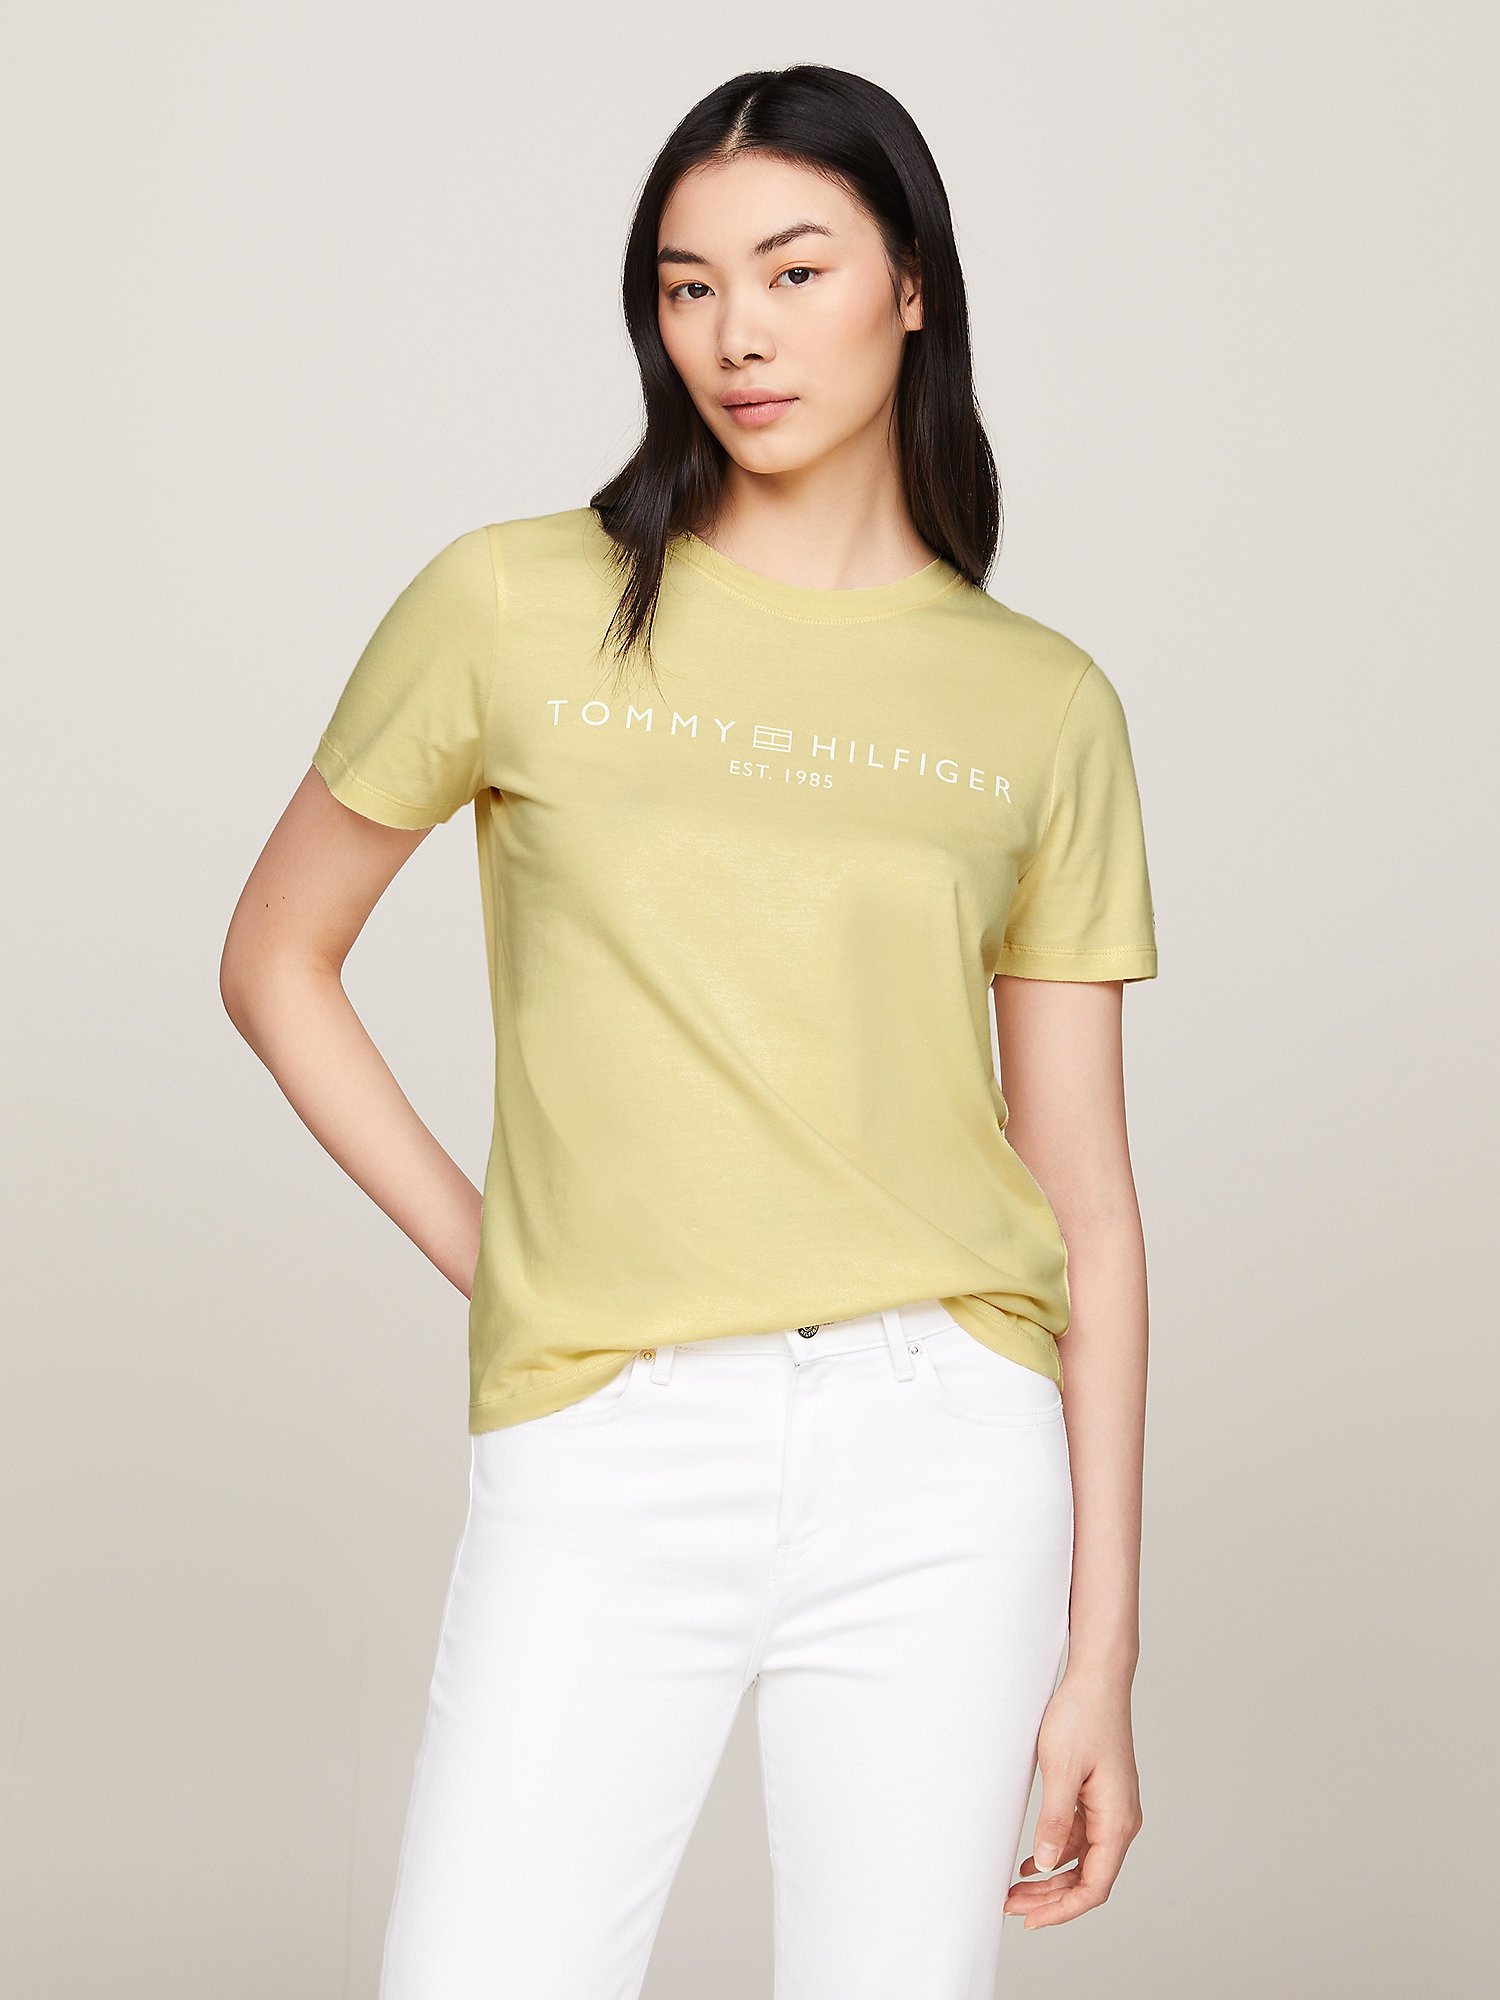 TOMMY HILFIGER T-shirt jaune pastel / blanc-Tommy Hilfiger 1